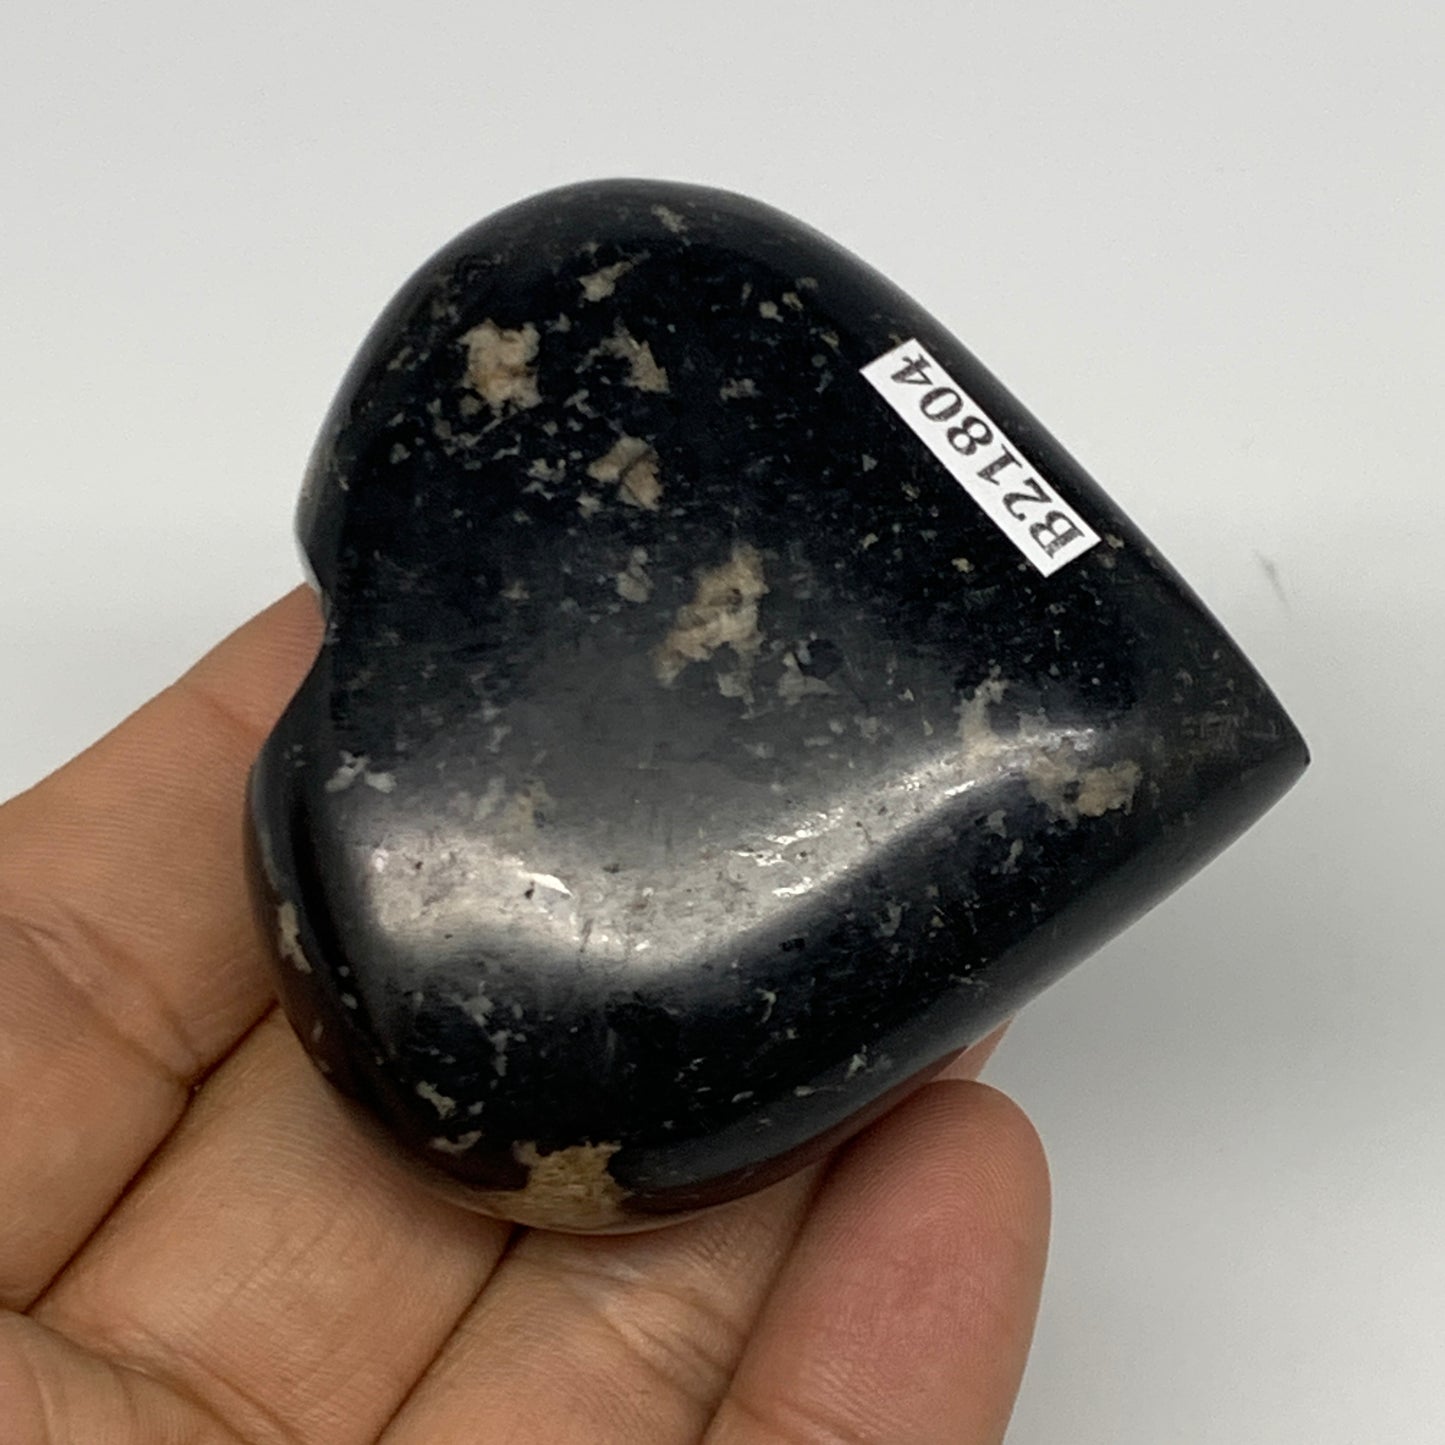 126.7g, 2.2"x2.3"x0.9", Black Tourmaline Heart Polished Crystal Home Decor, B218